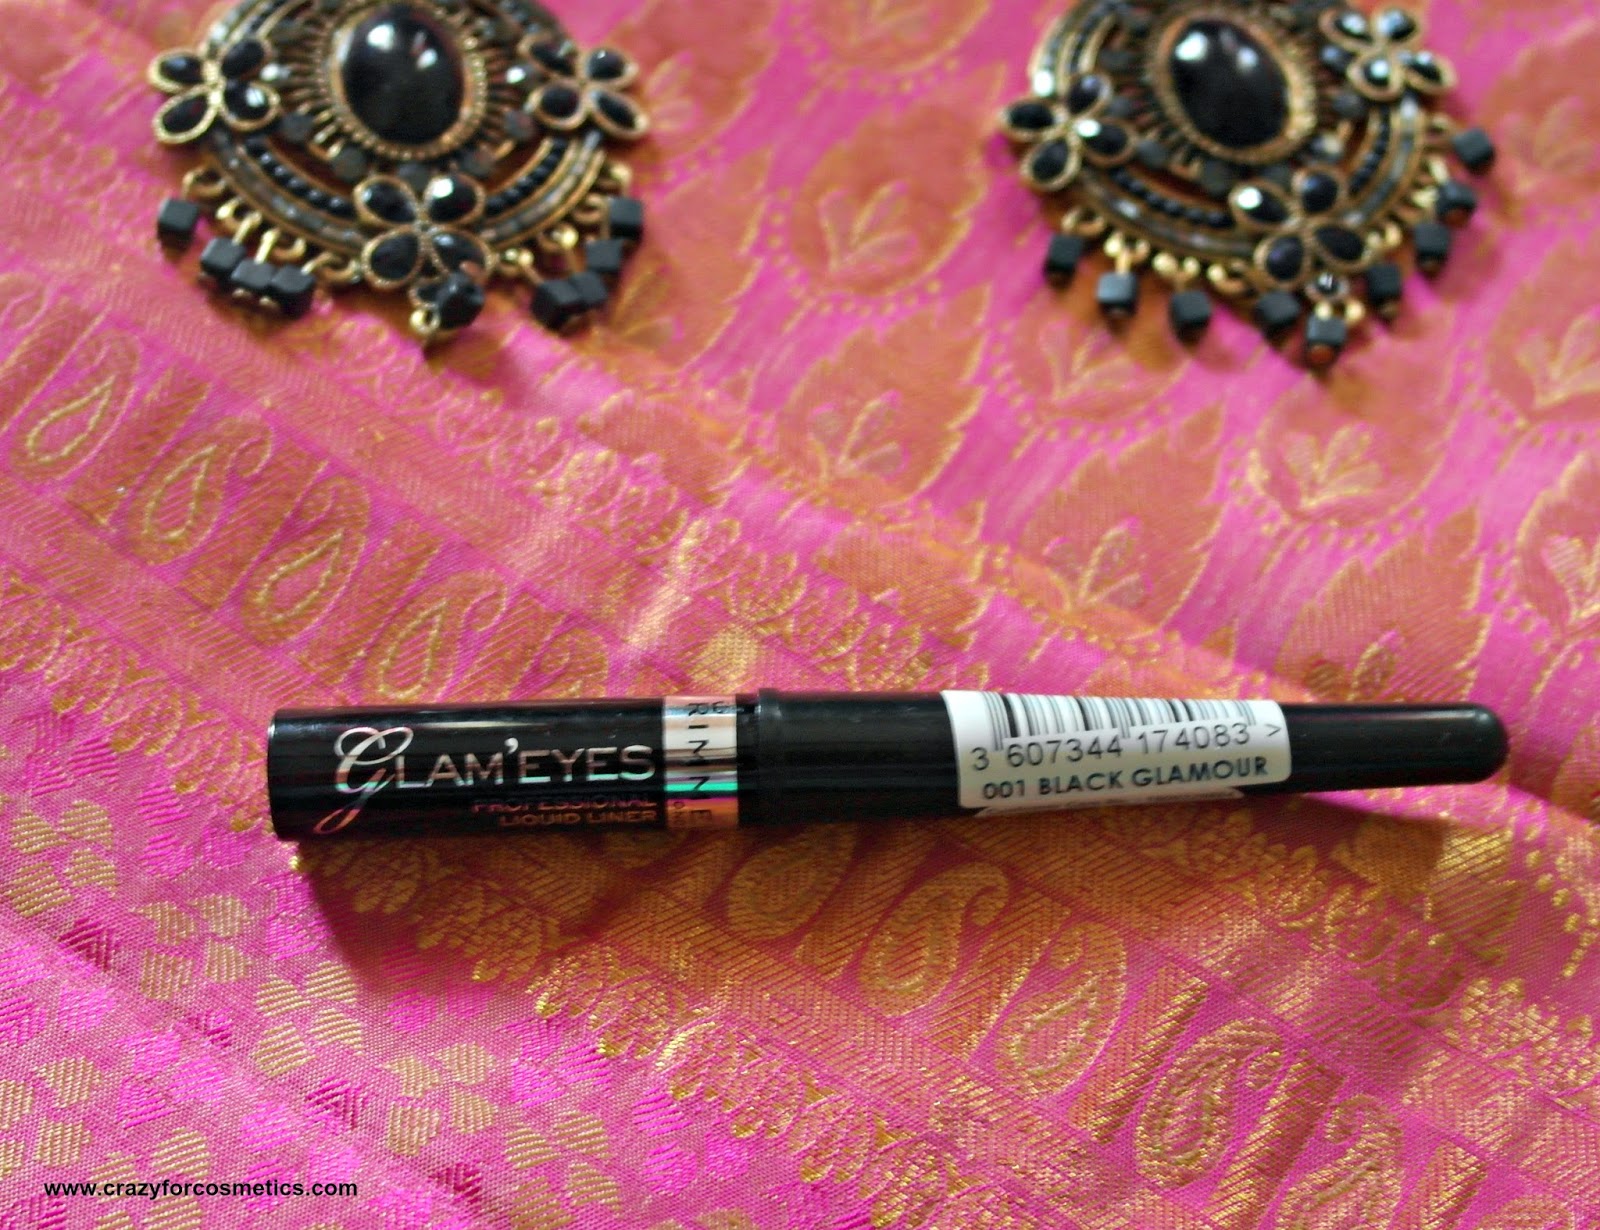 Rimmel London Glam Eyes Professional Liquid Eyeliner in 001 Black Glamour Review